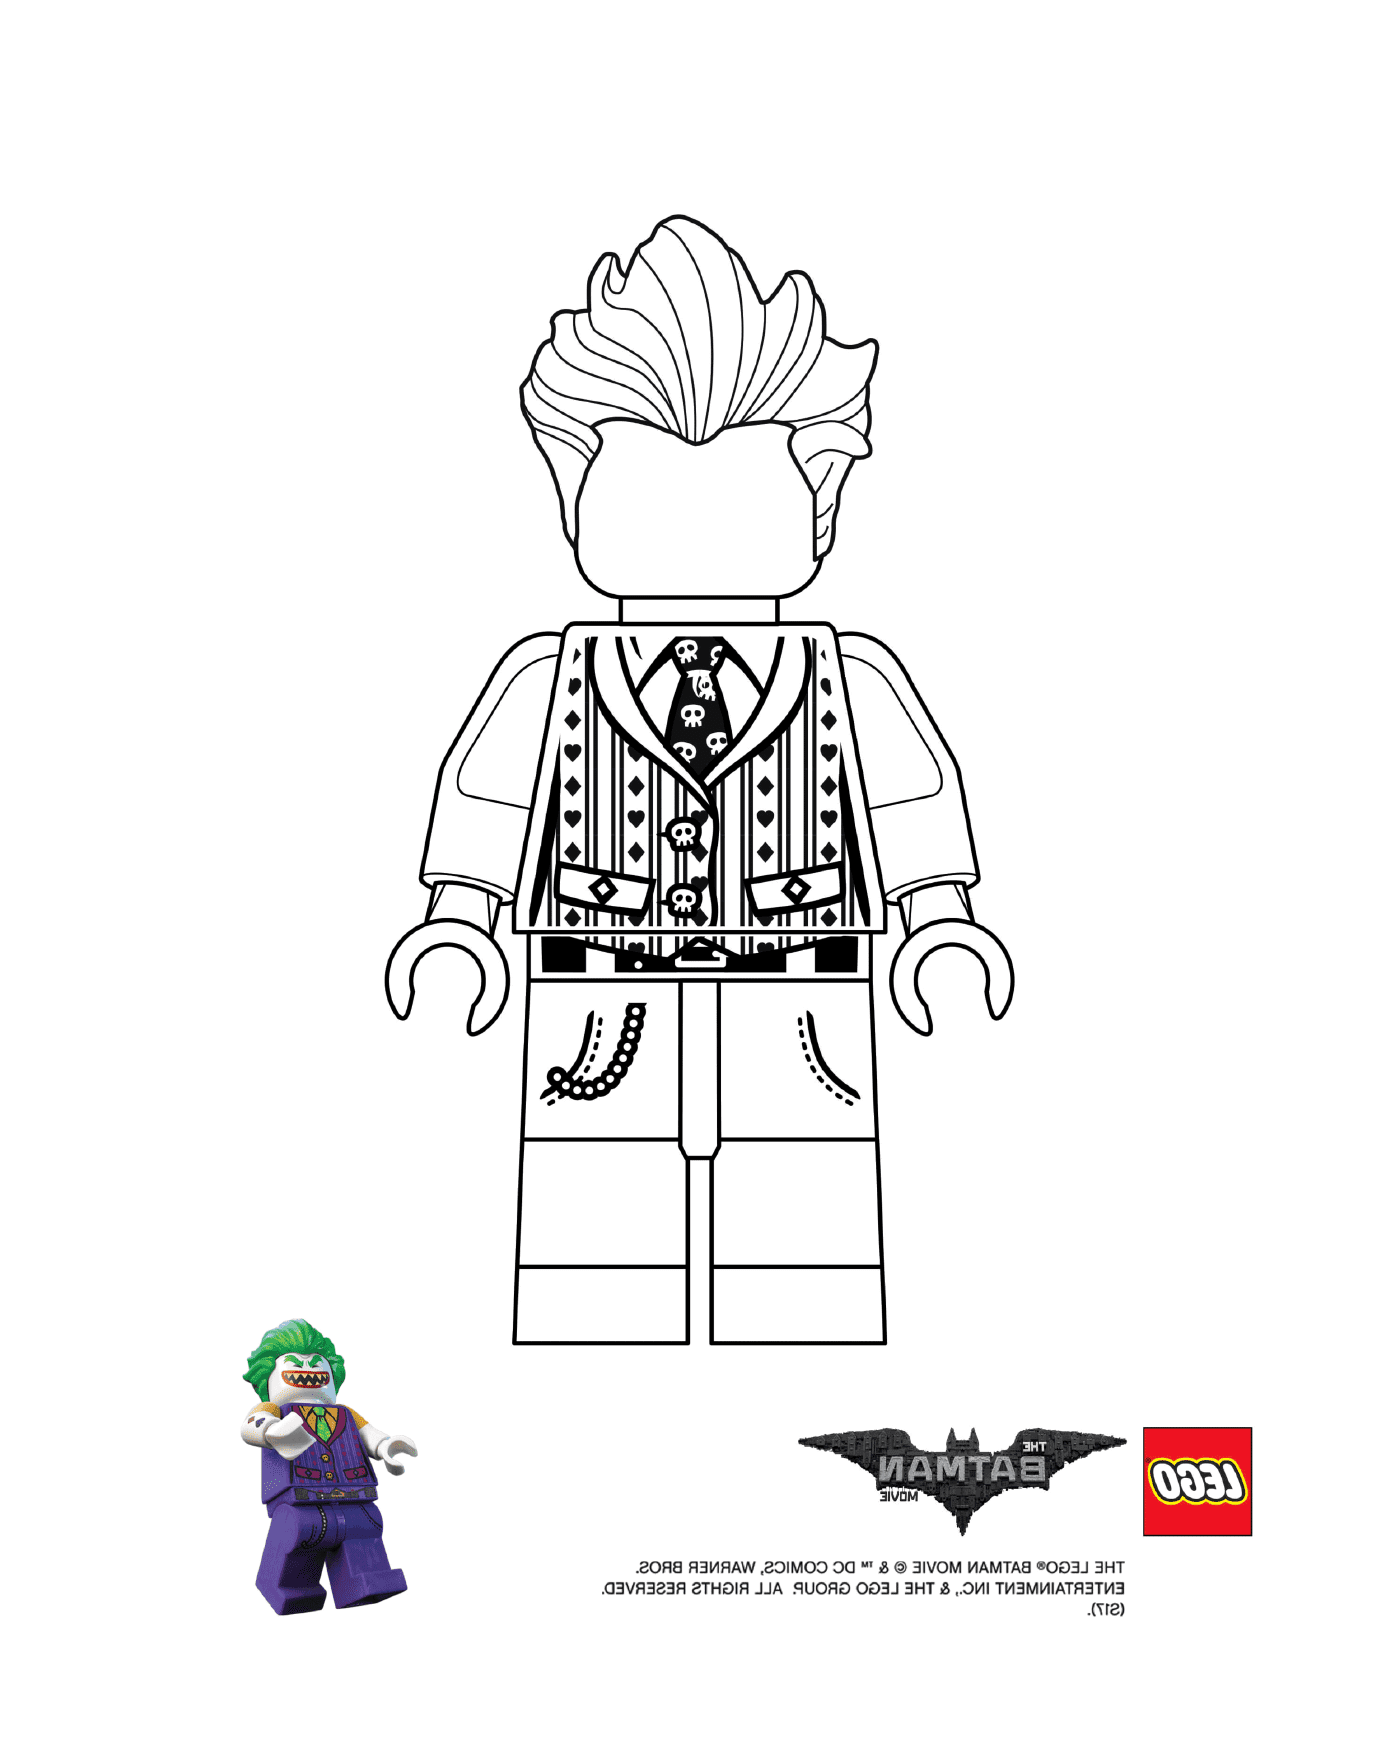  Joker Lego from the movie Lego Batman 